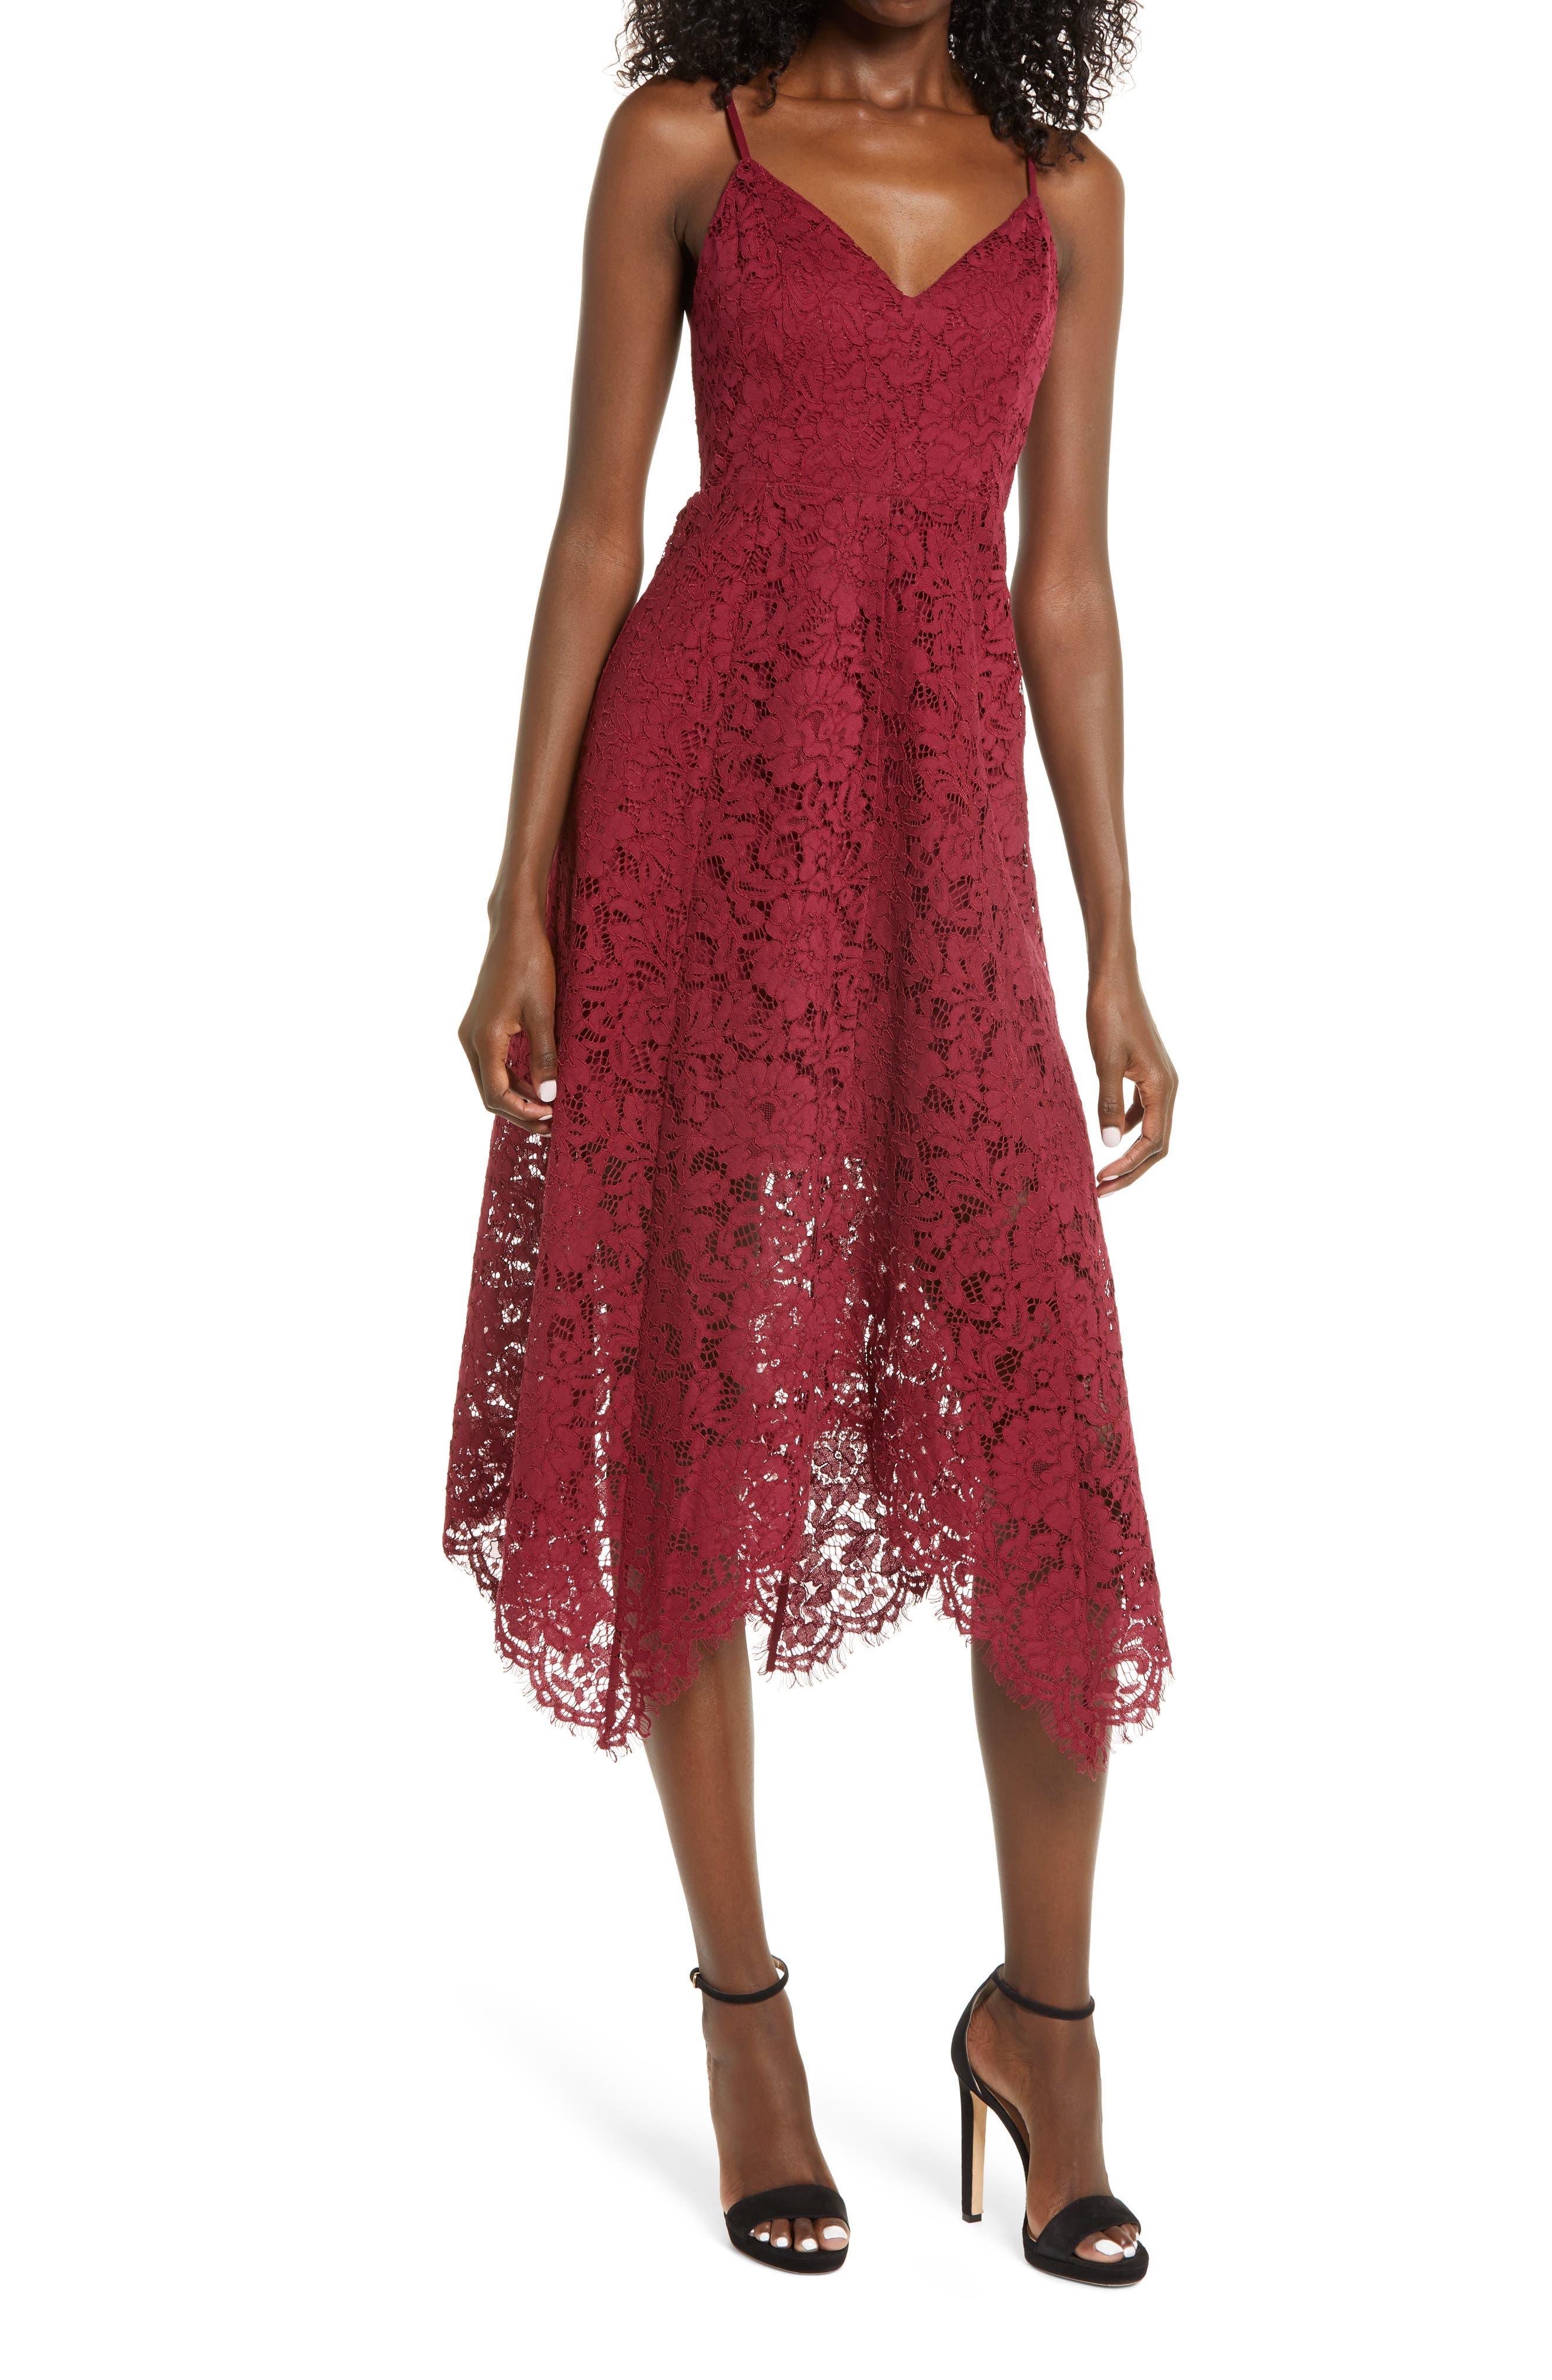 one wish burgundy lace midi dress